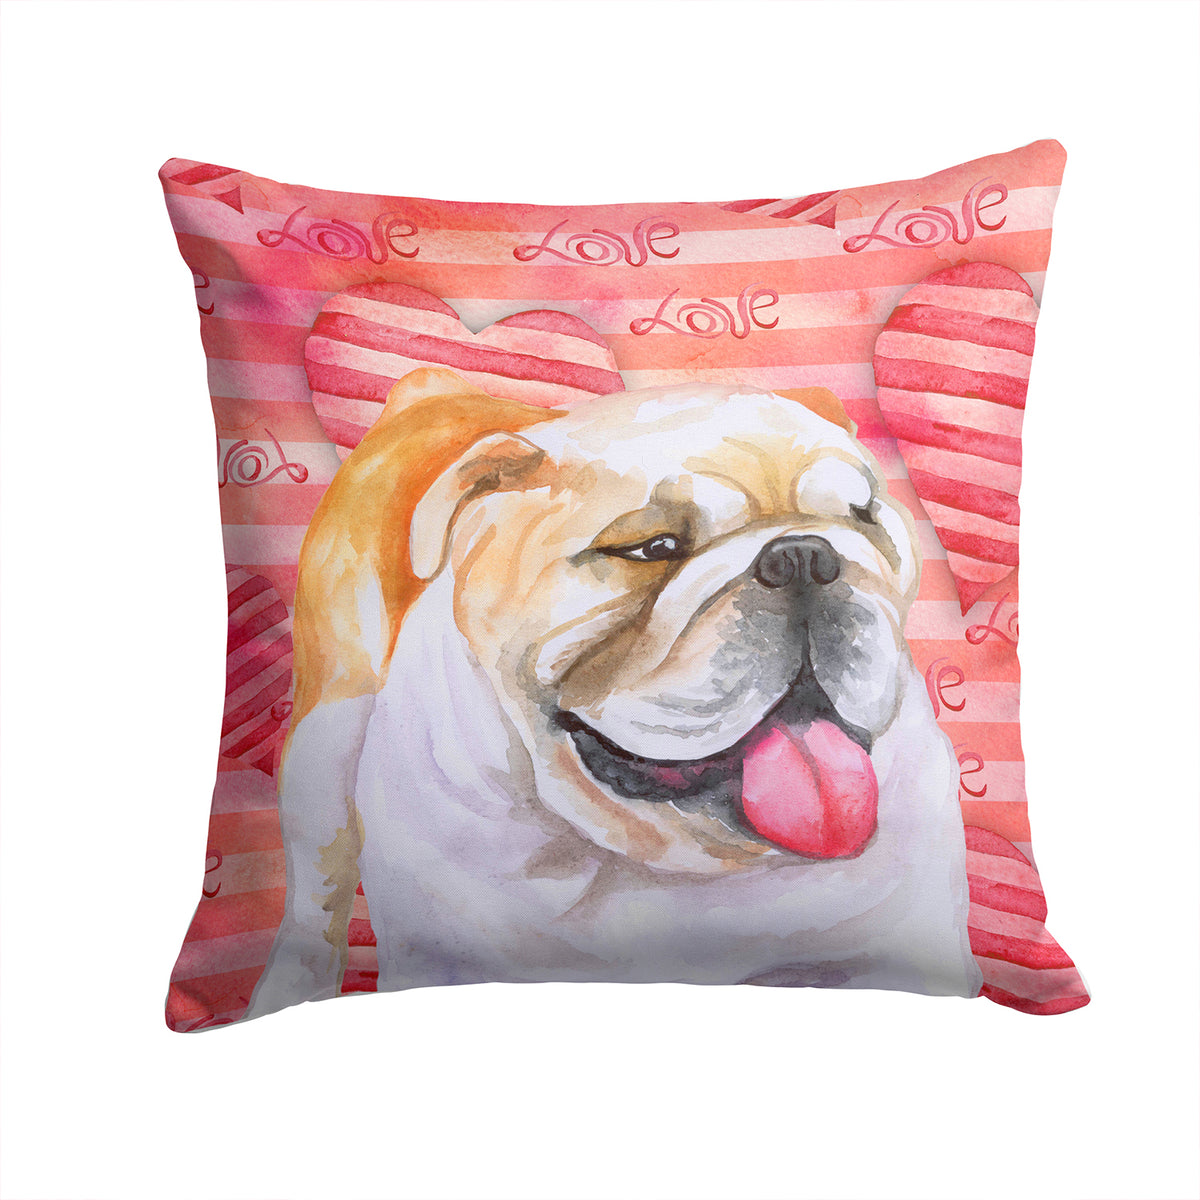 English Bulldog Love Fabric Decorative Pillow BB9726PW1414 - the-store.com